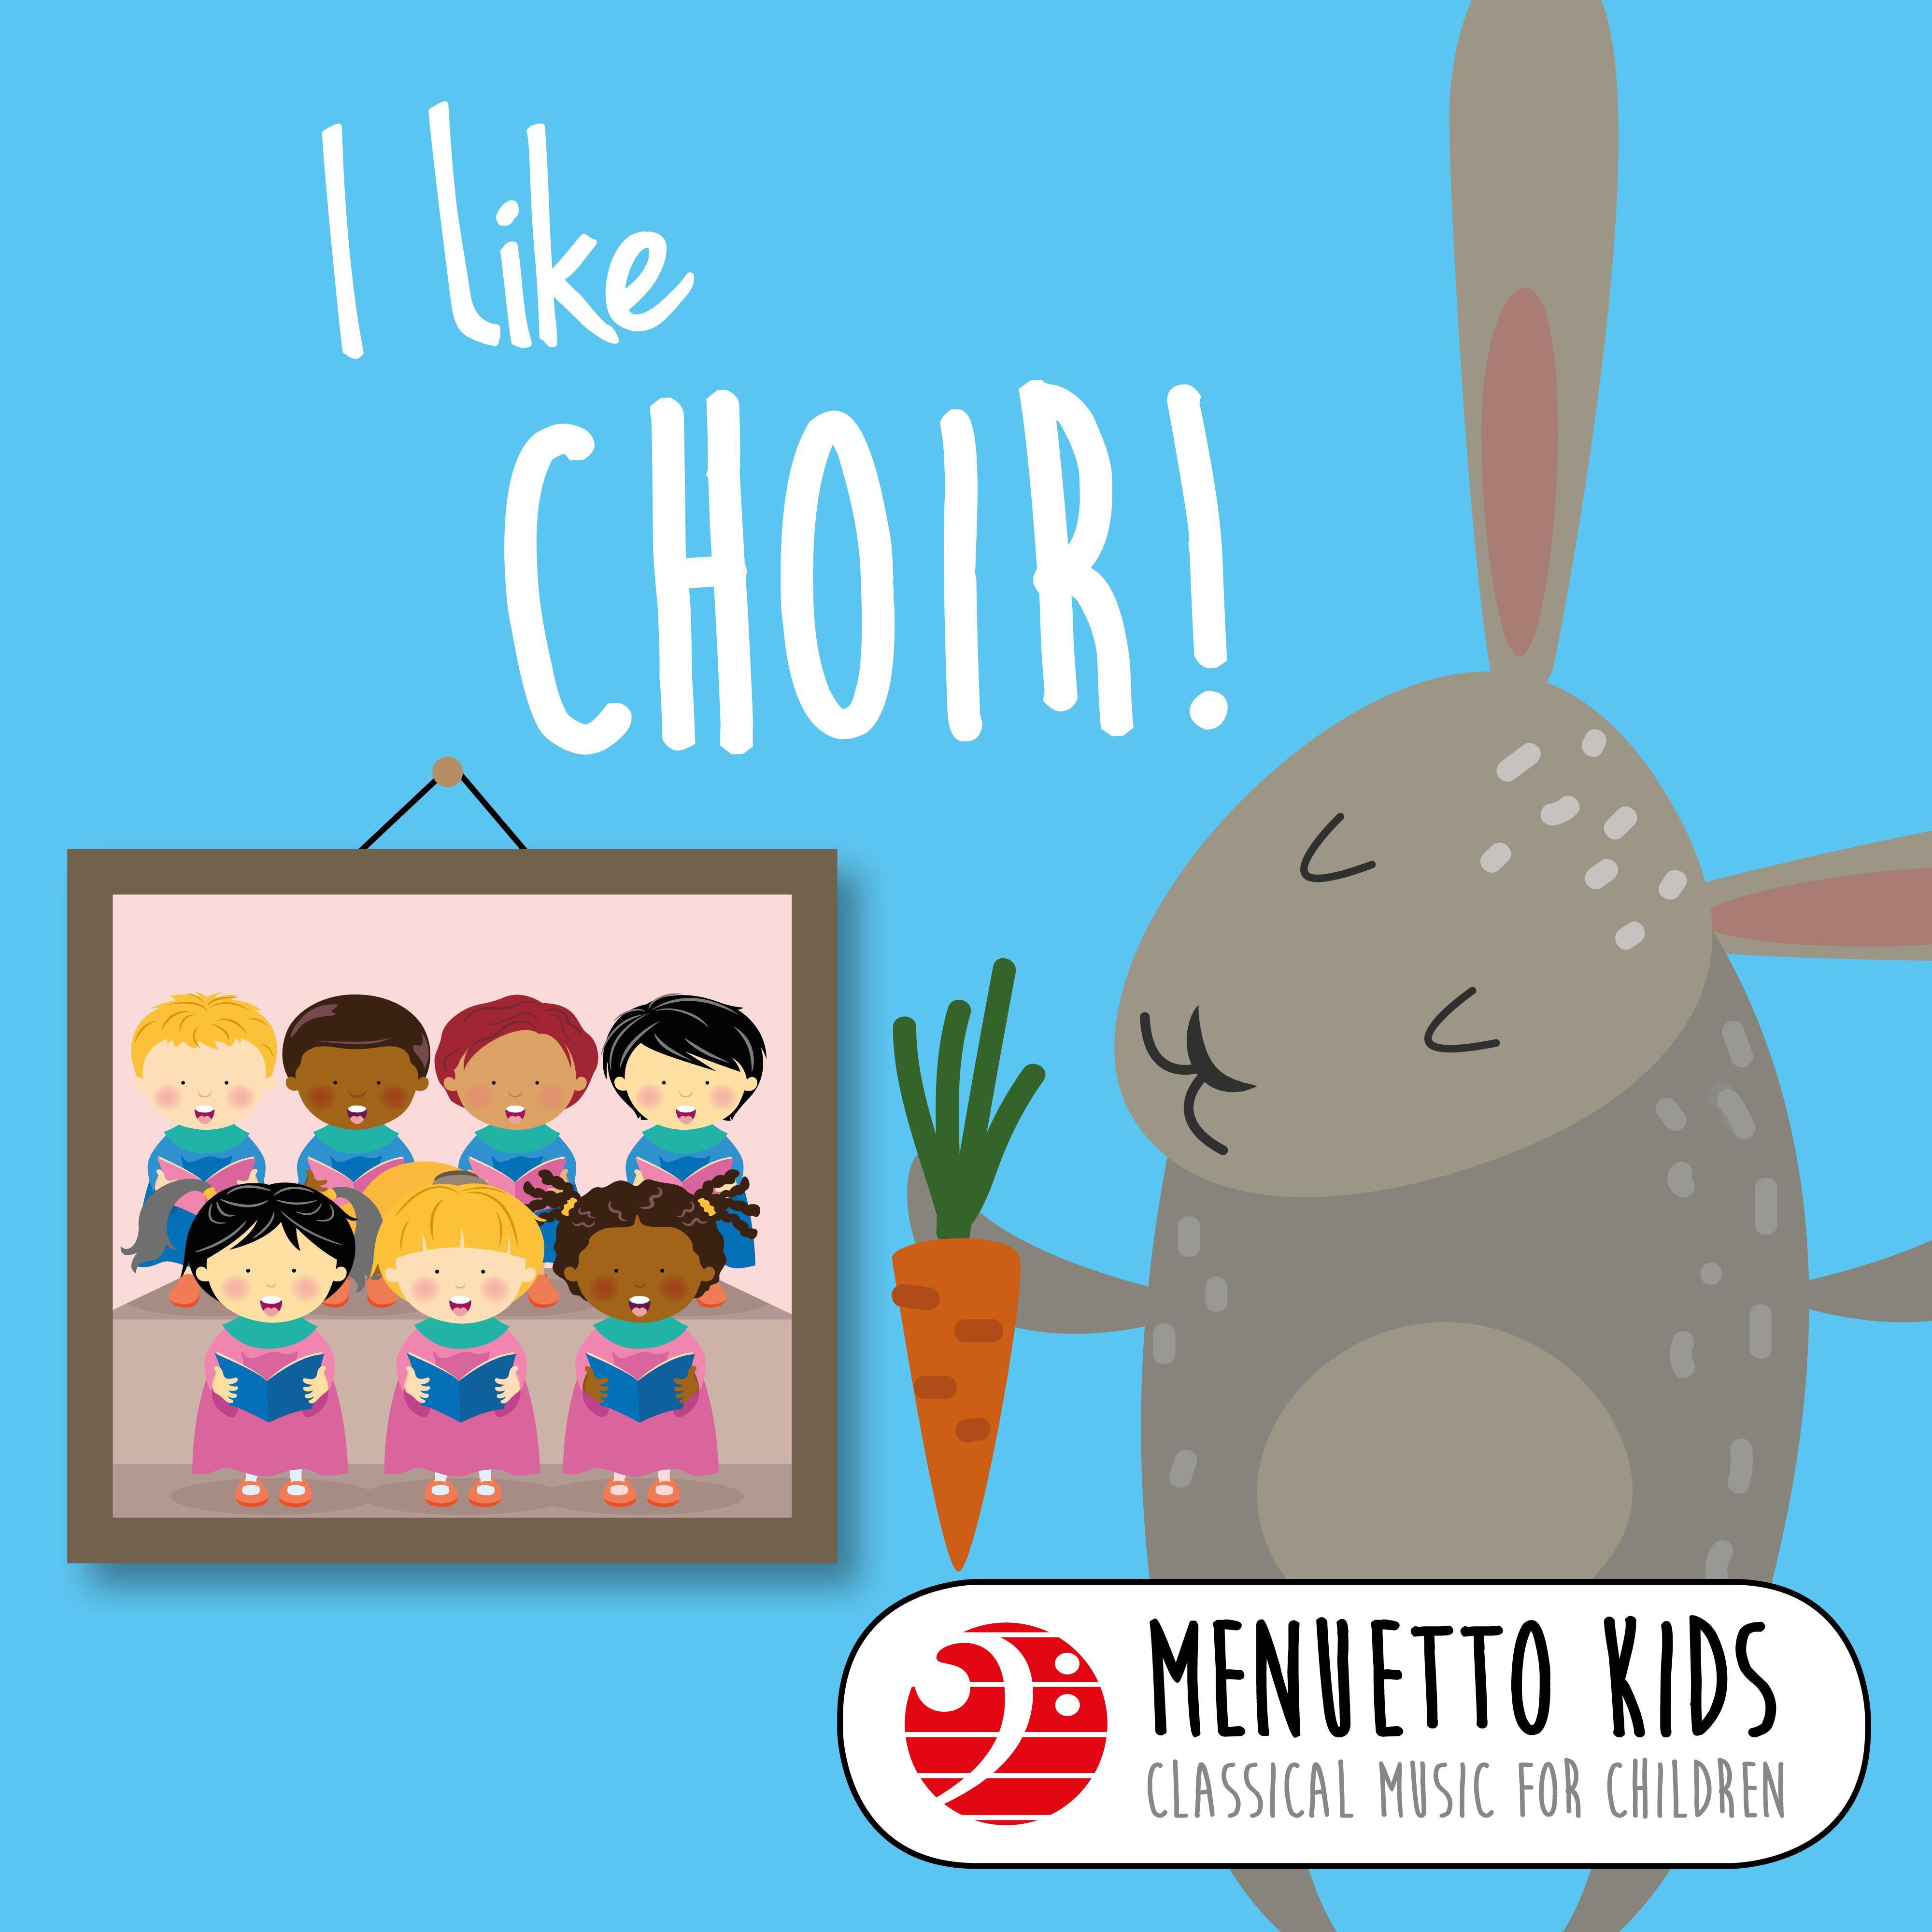 I Like Choir! (Menuetto Kids - Classical Music for Children)